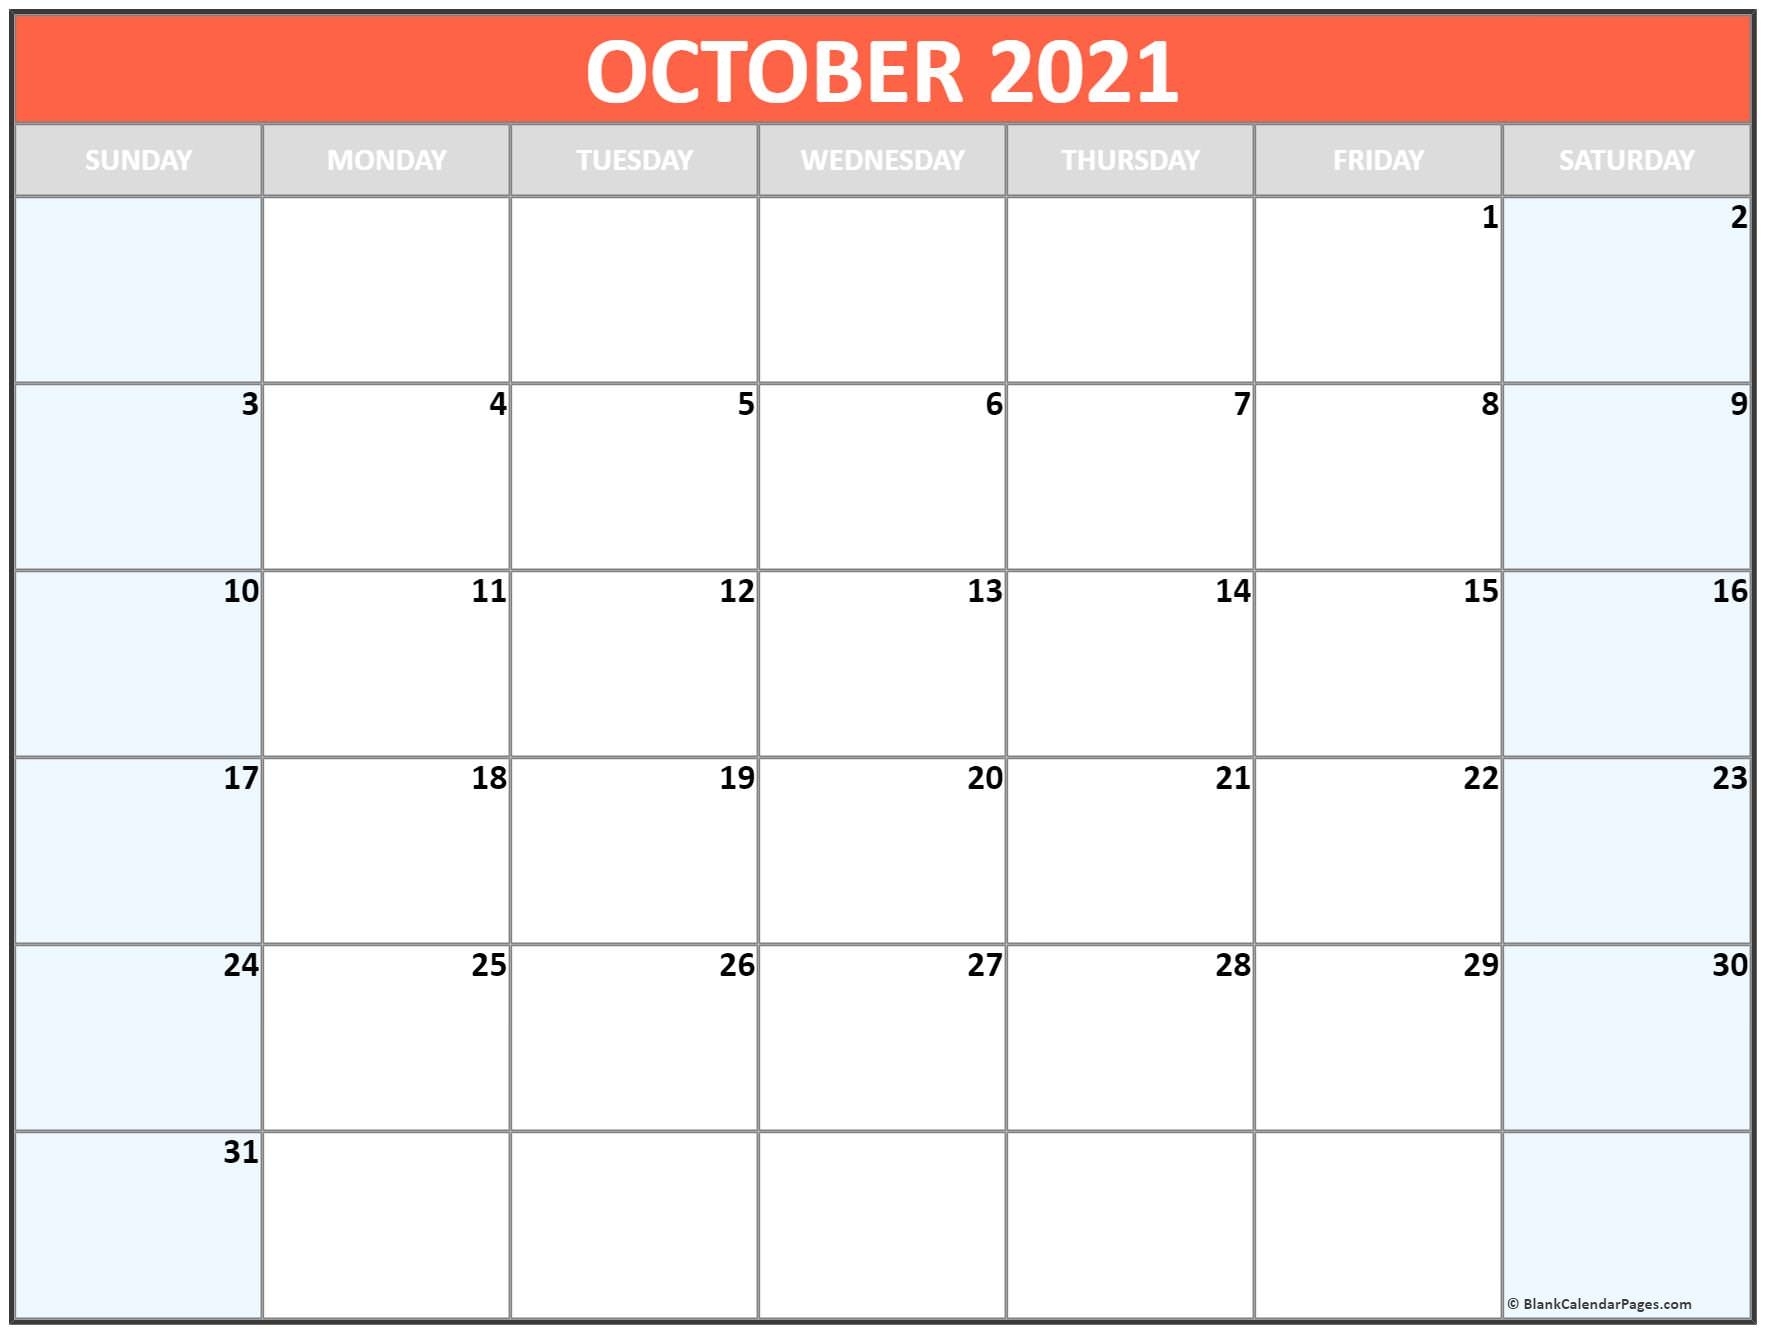 October 2021 Blank Calendar Templates. Print A Calendar October 2021